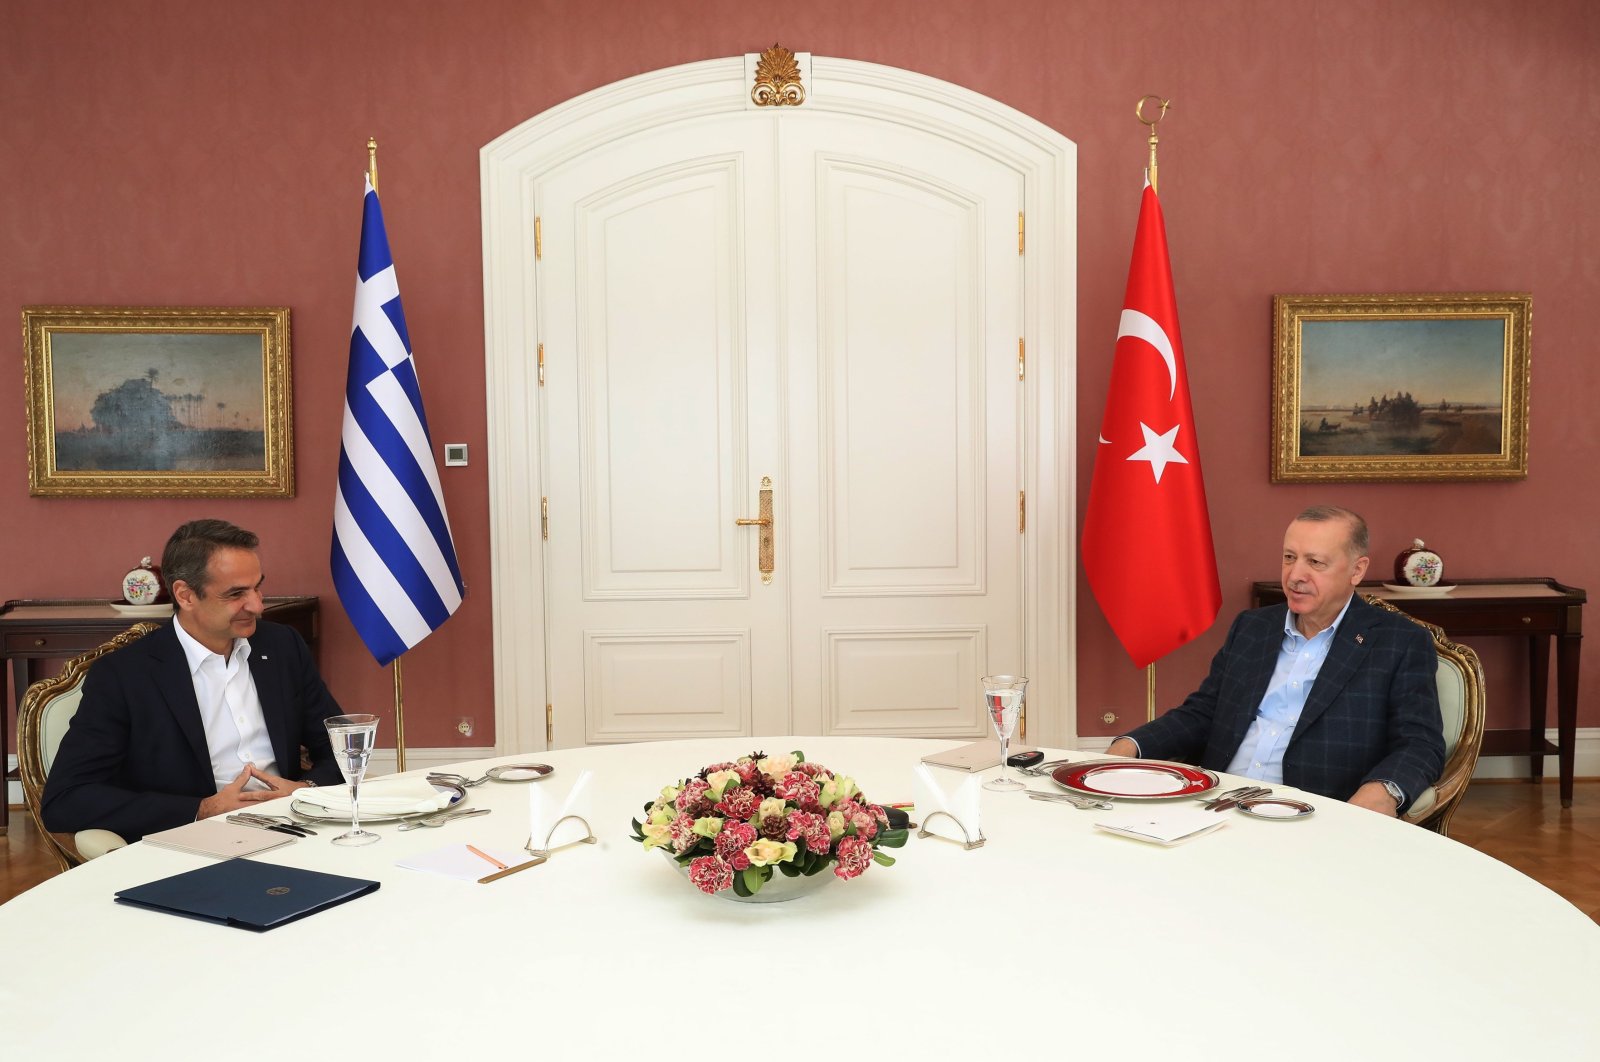 President Recep Tayyip Erdoğan and Greek Prime Minister Kyriakos Mitsotakis meet at the Vahdettin Pavilion, Istanbul, Turkey, March 13, 2022. (AA Photo)